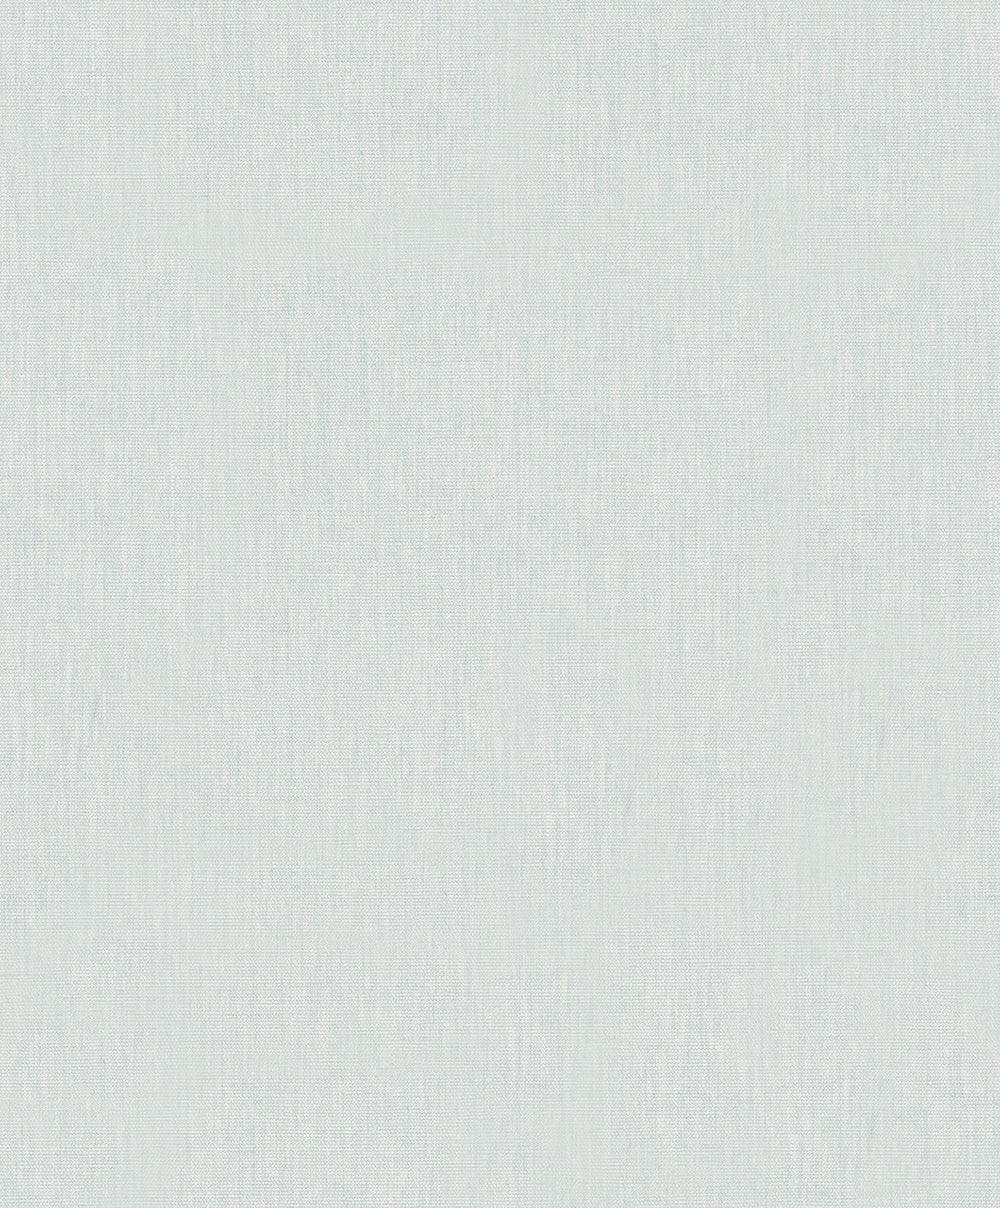 Botanica - Textured Plains plain wallpaper Marburg Roll Light Blue  33326